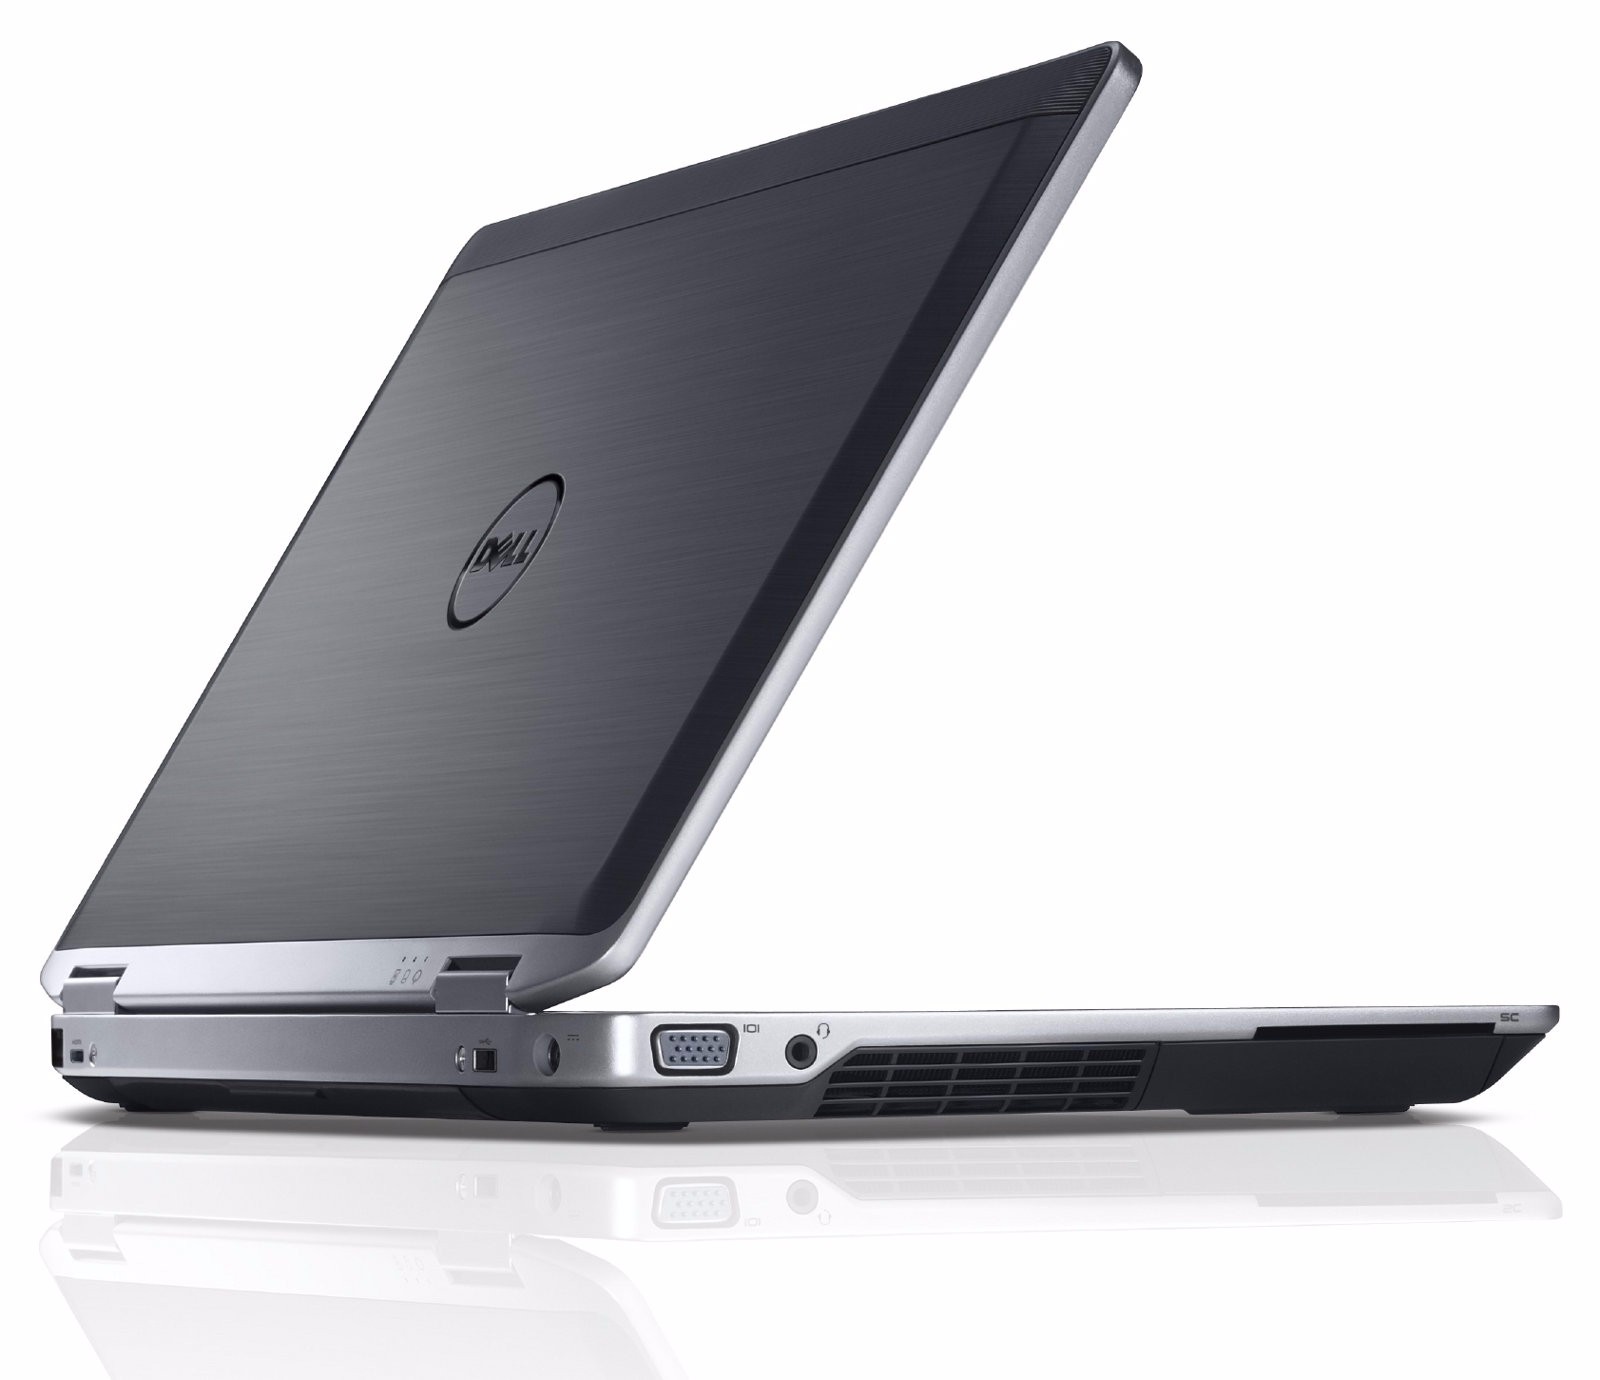 Laptop DELL E6420 (Core i5 , 4GB, 250G HDD, 14 inch)_Full Box